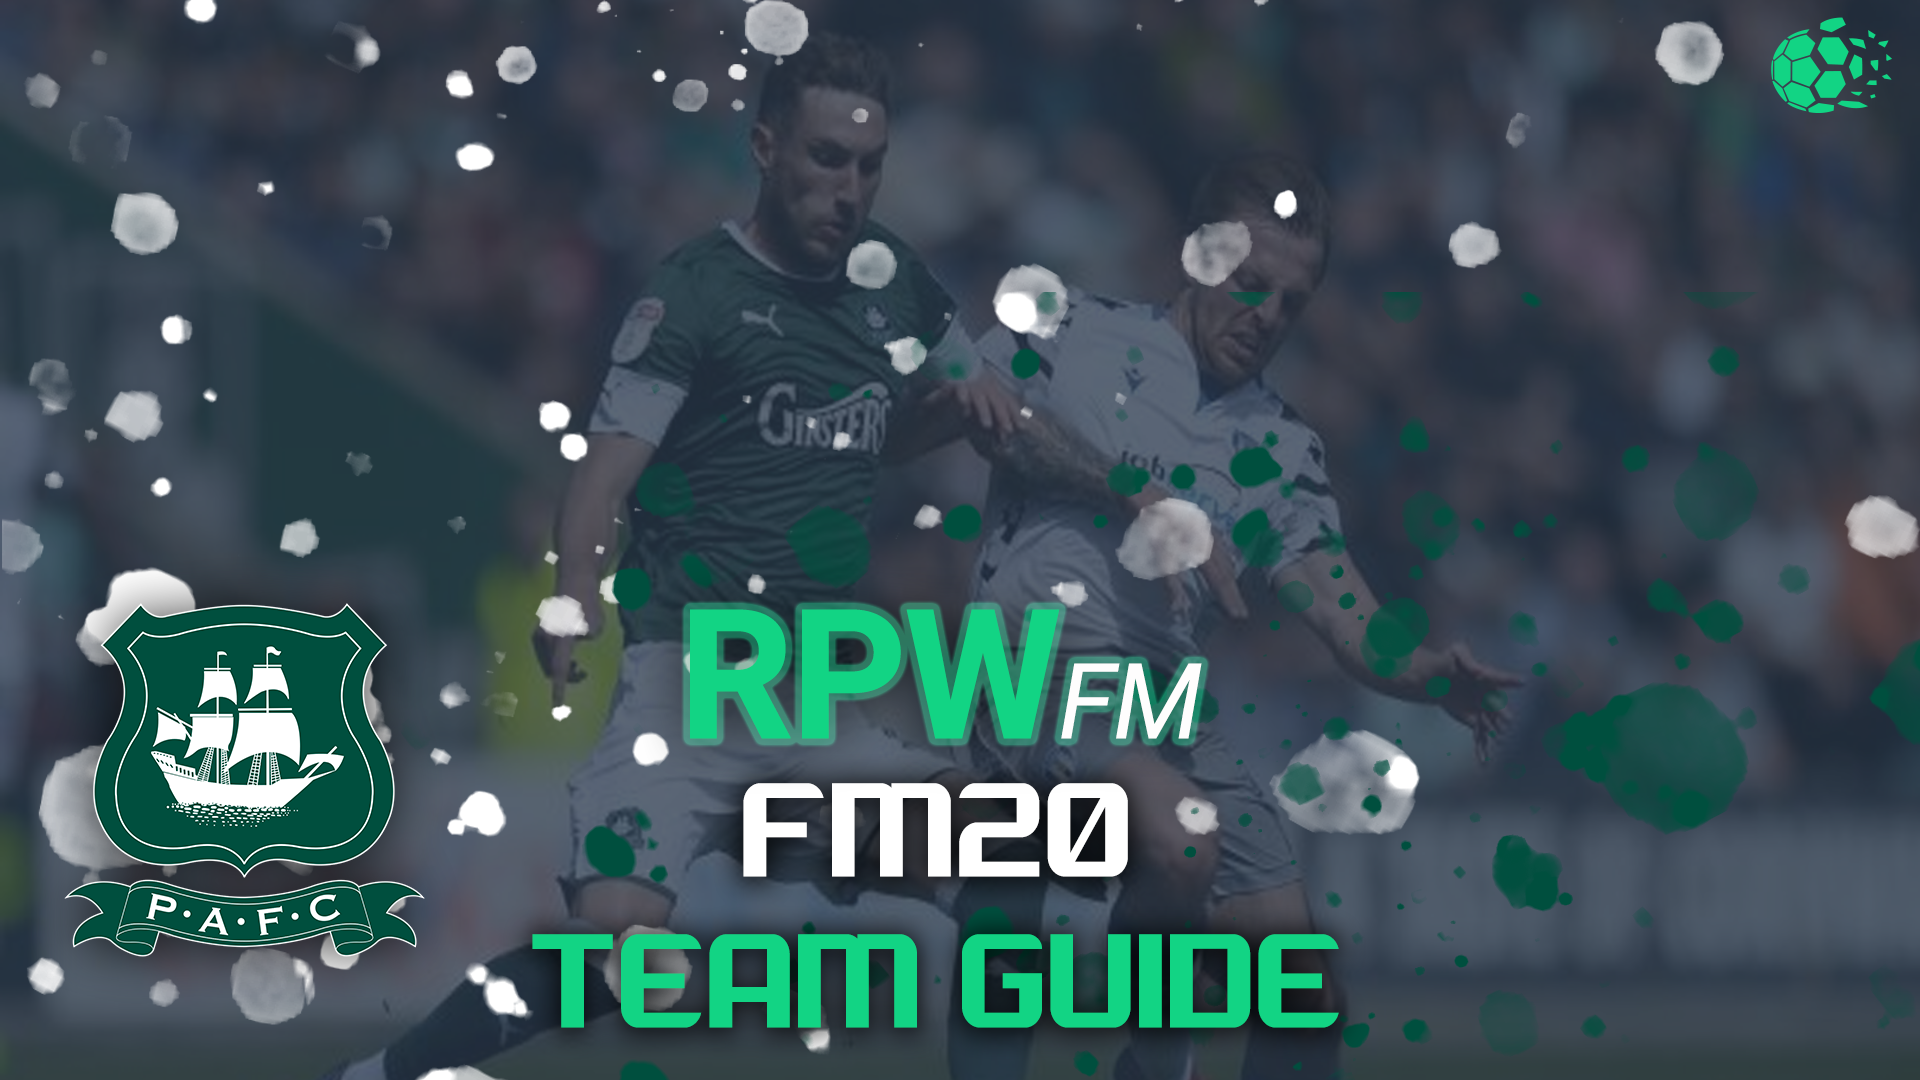 FM20 FM20 Team Guide - Plymouth Argyle